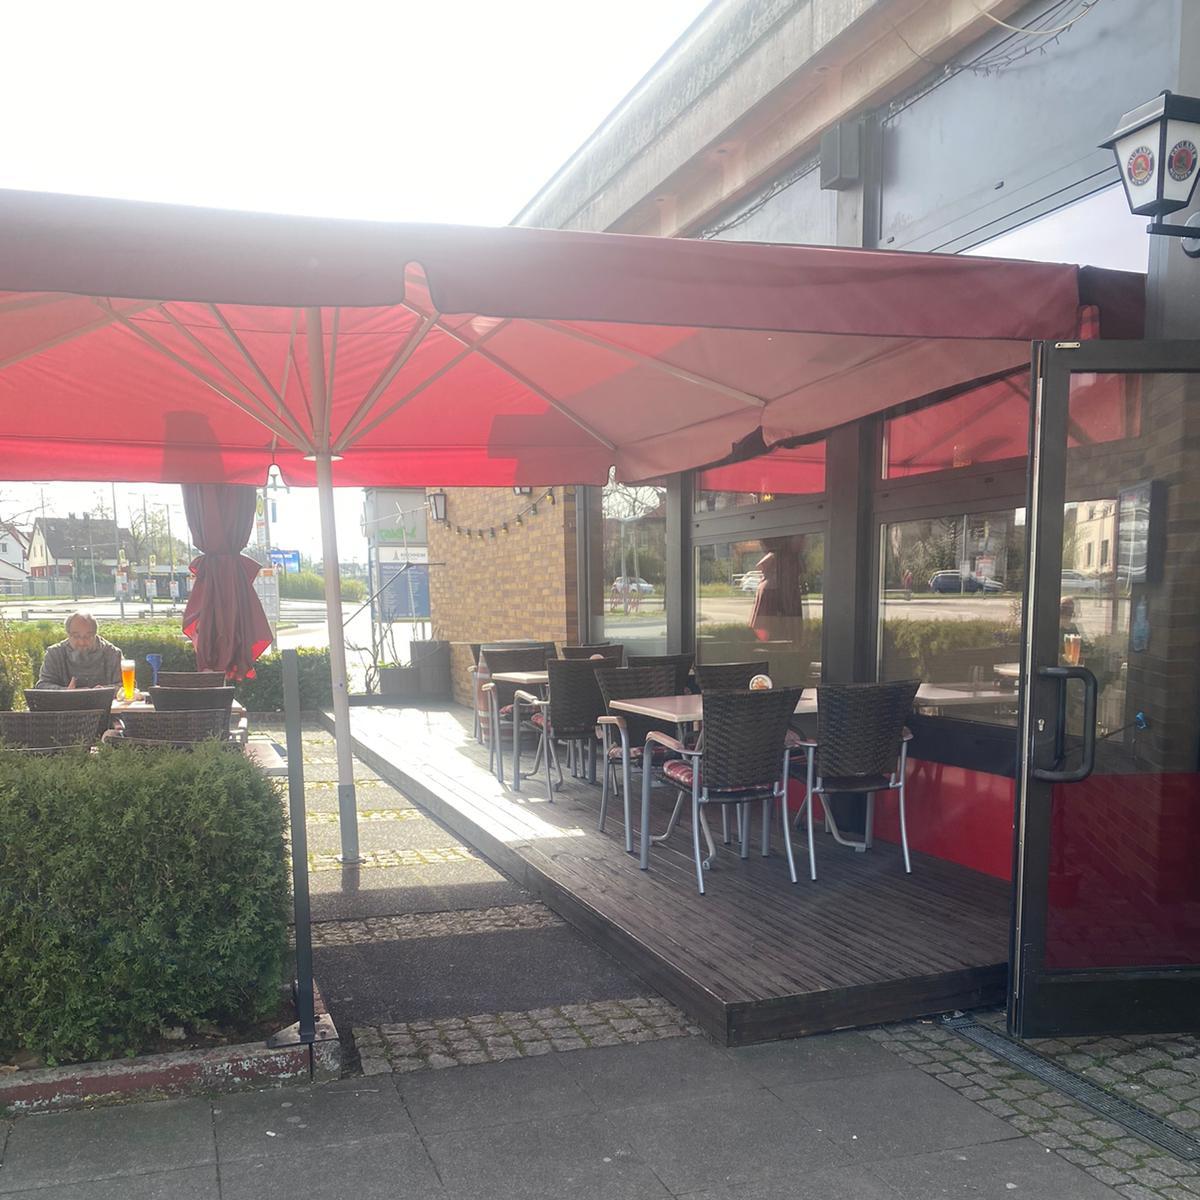 Restaurant "Restaurants Döner am Bahnhof" in Kirchheim unter Teck